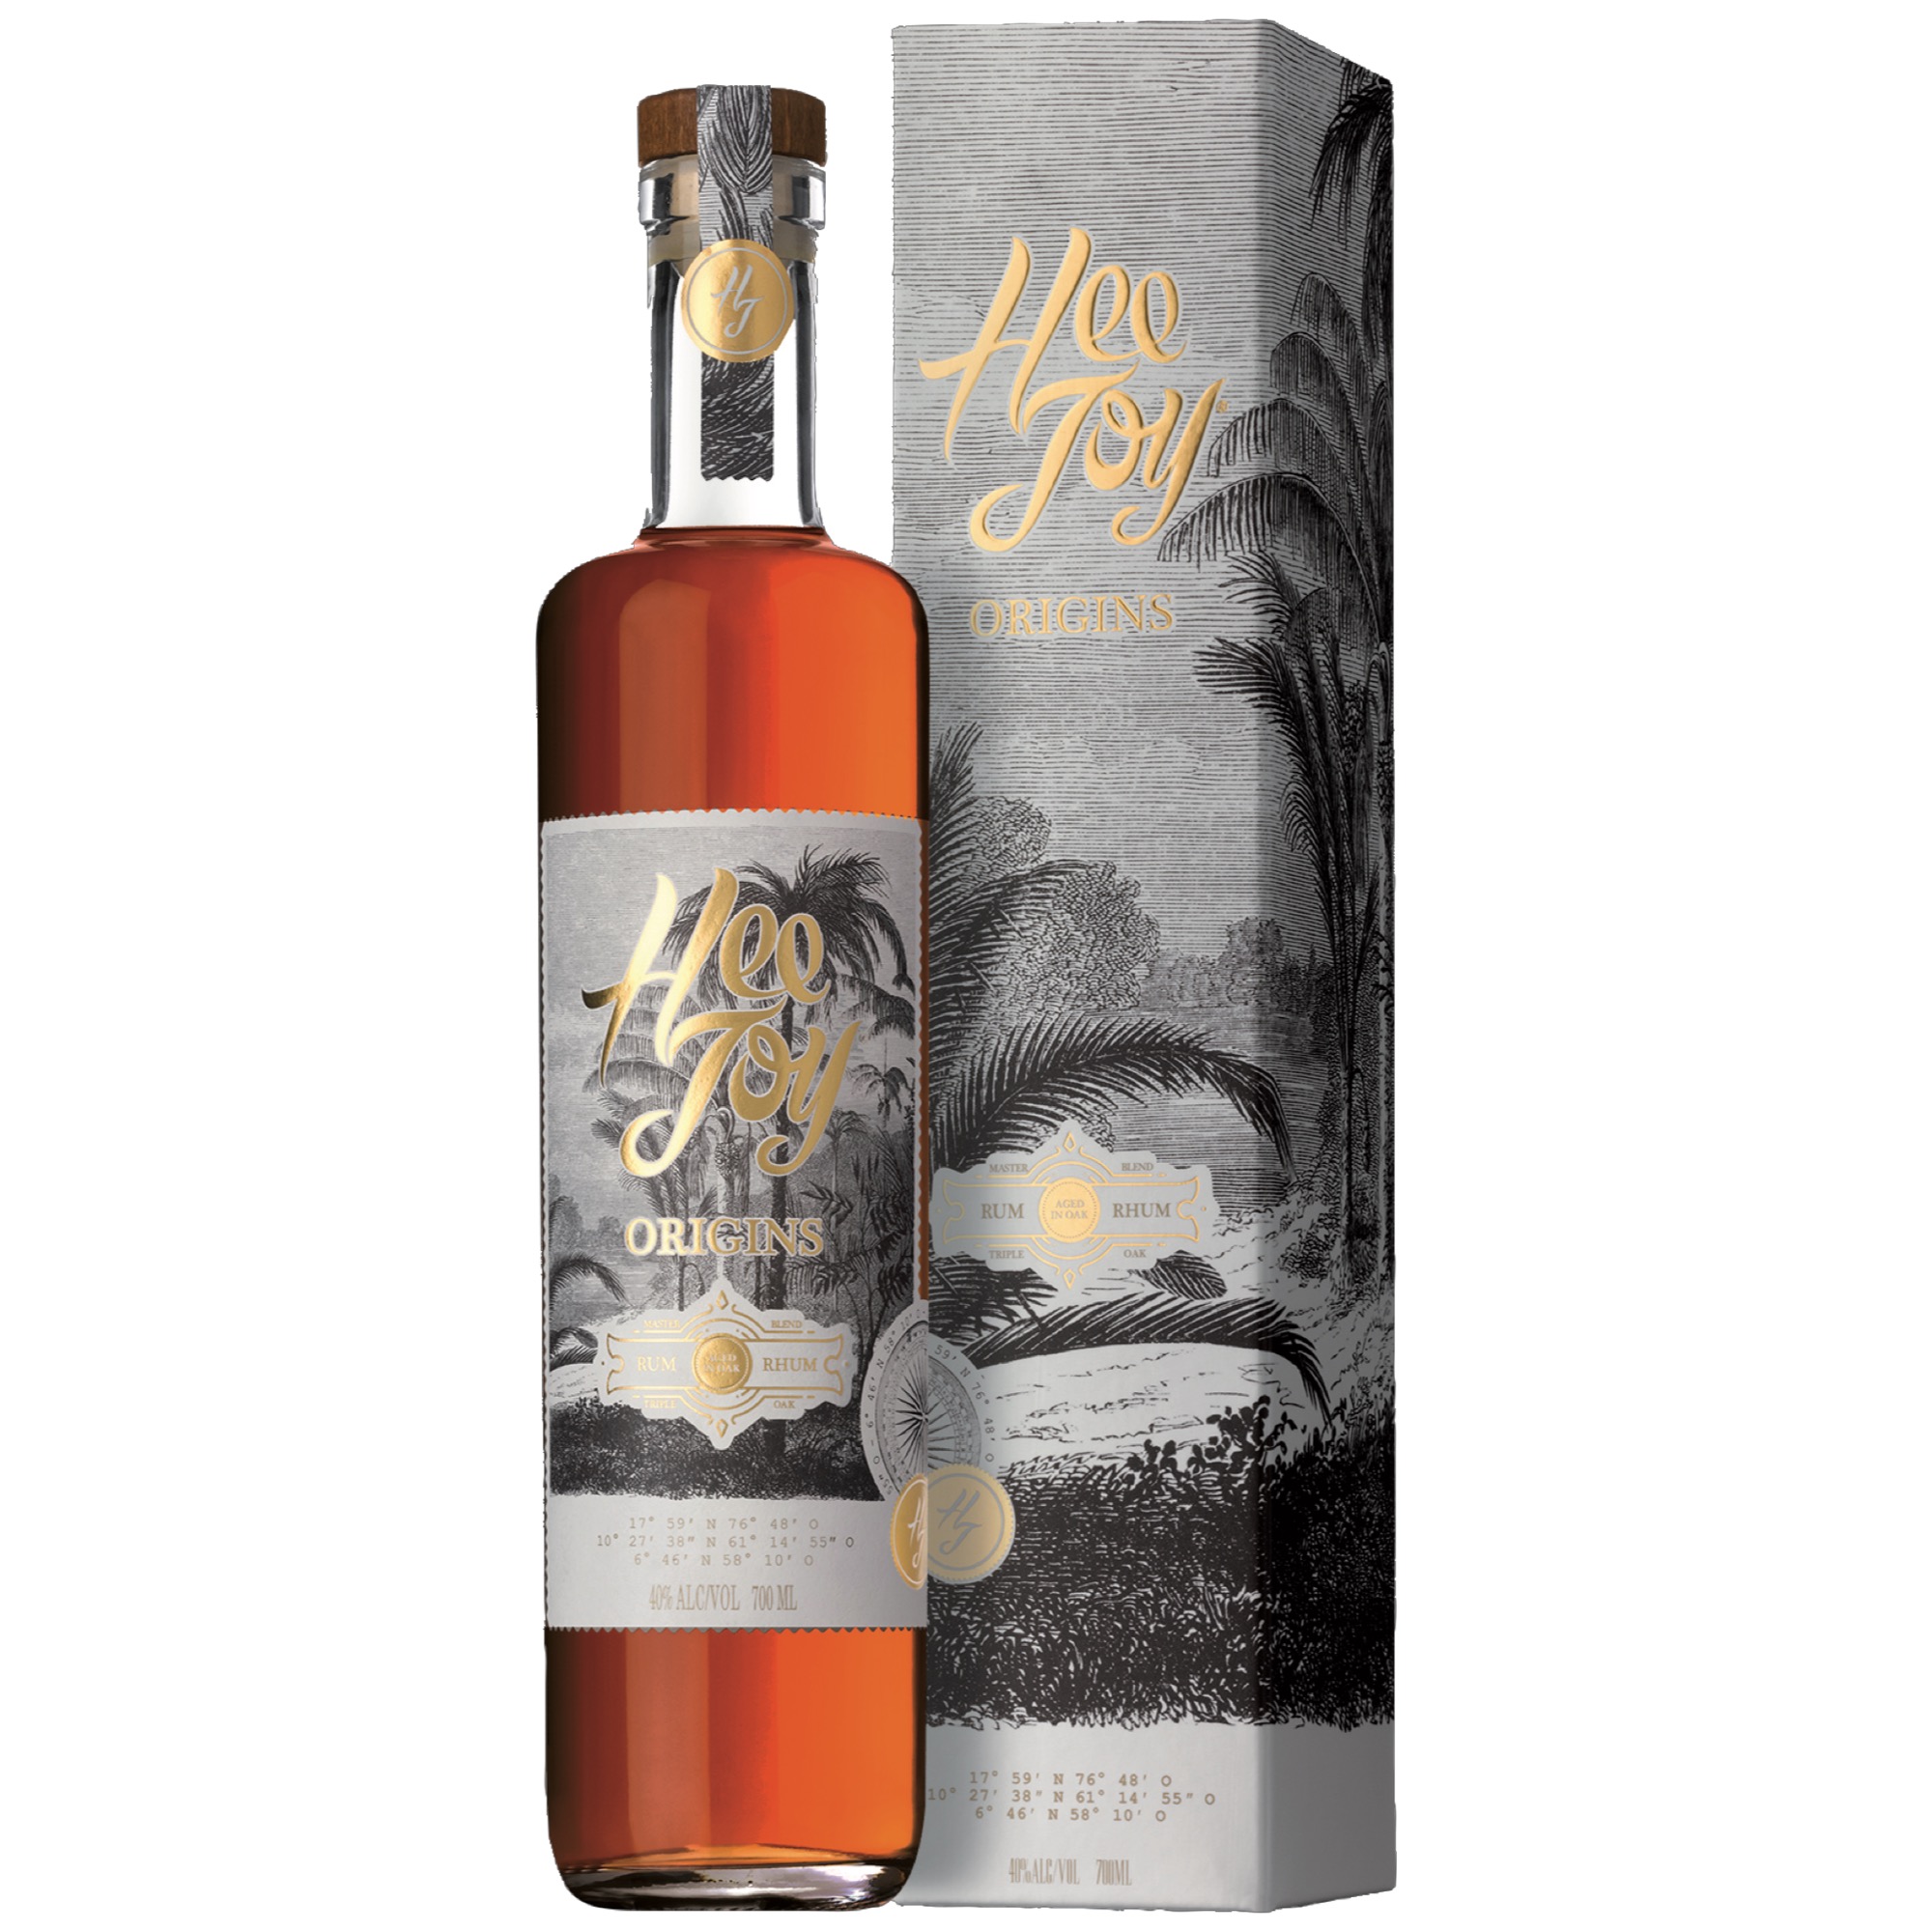 Hee Joy Origins Rum Triple Oak 0,7l